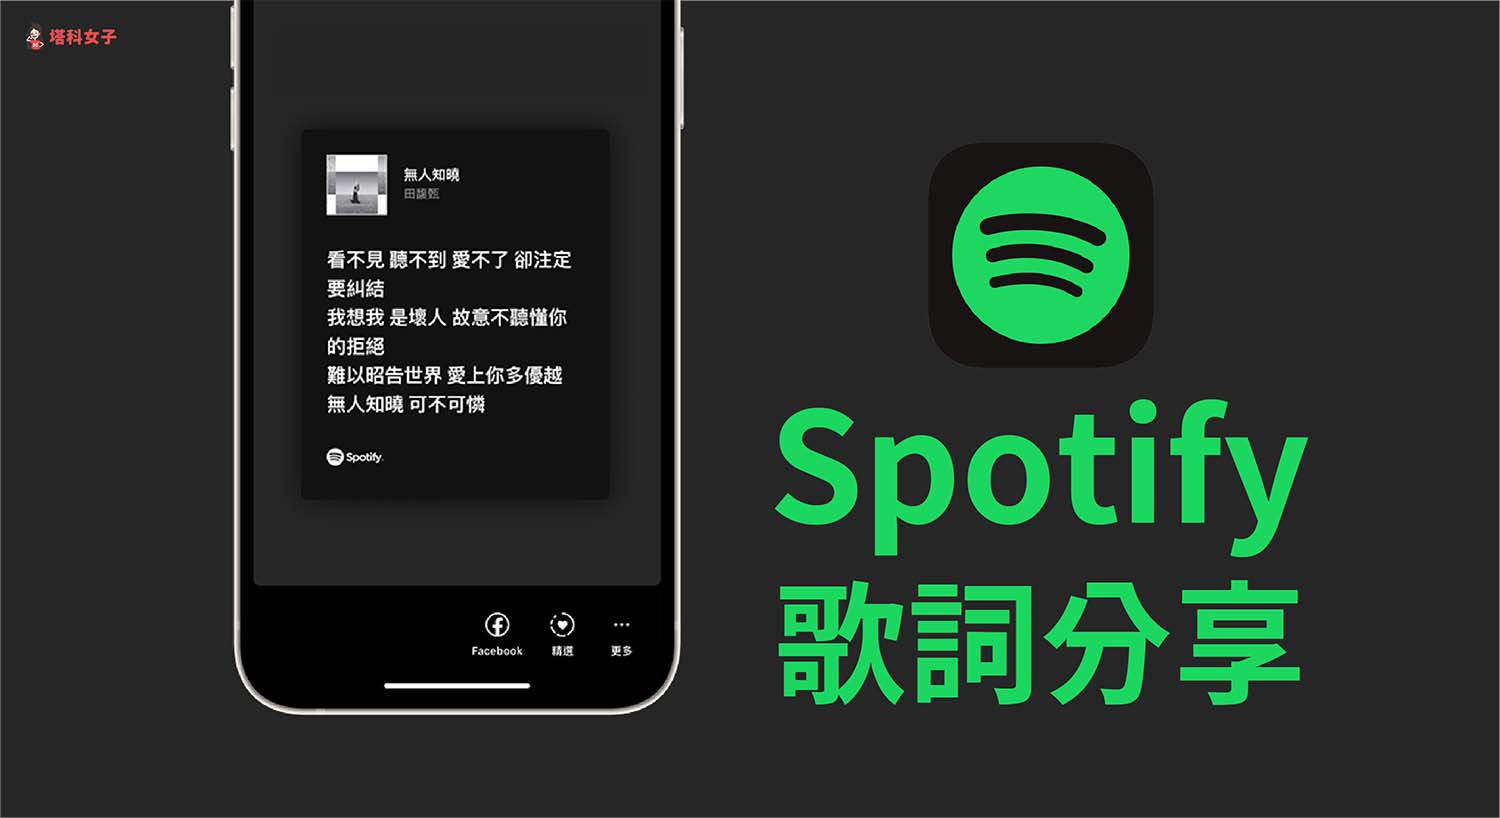 Spotify 歌詞分享教學，選取指定歌詞並分享到 IG 限時動態或 FB